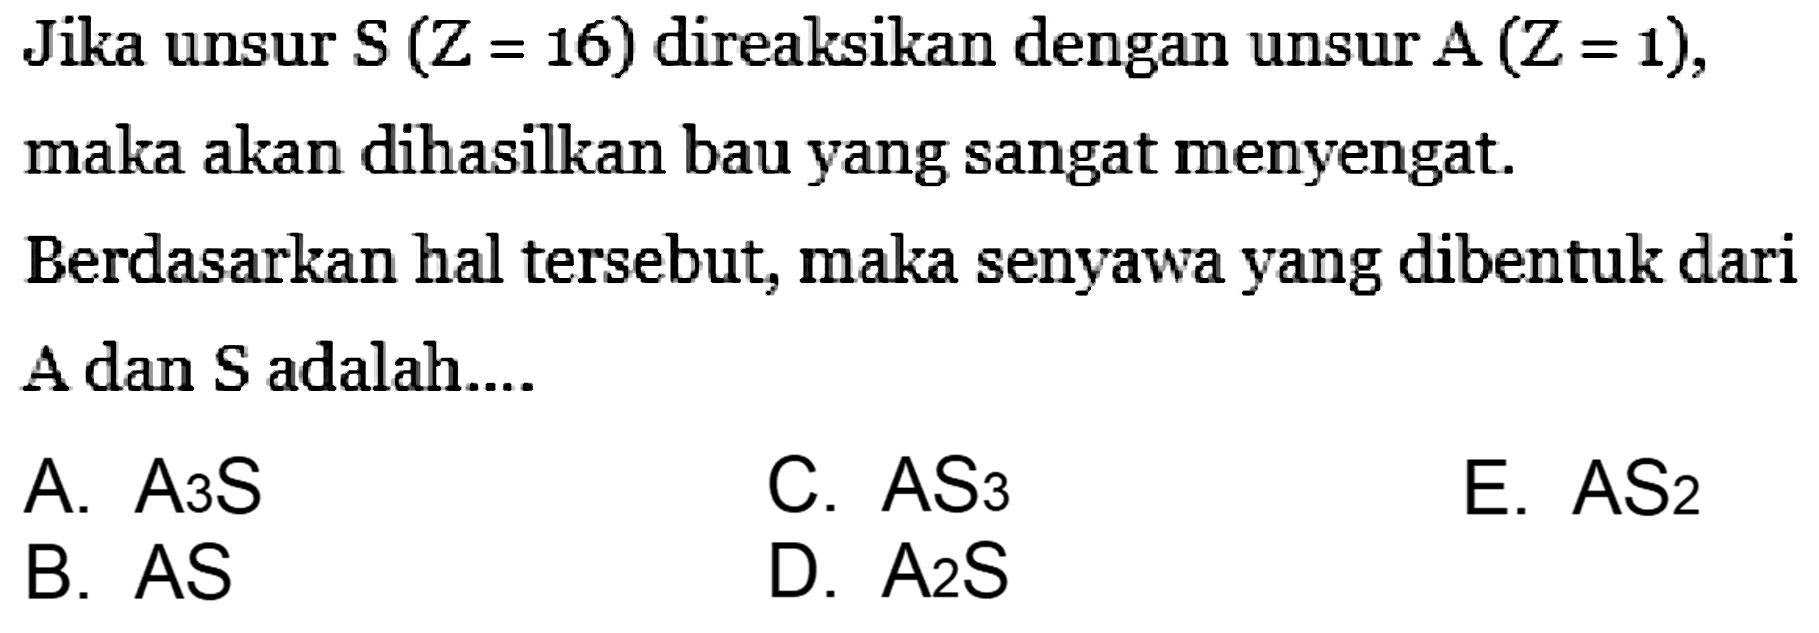 Jika unsur S(Z=16) direaksikan dengan unsur A(Z=1), maka akan dihasilkan bau yang sangat menyengat.
Berdasarkan hal tersebut, maka senyawa yang dibentuk dari A dan S adalah...
A. A3S 
C. AS3 
E. AS2 
B. AS
D. A2S 